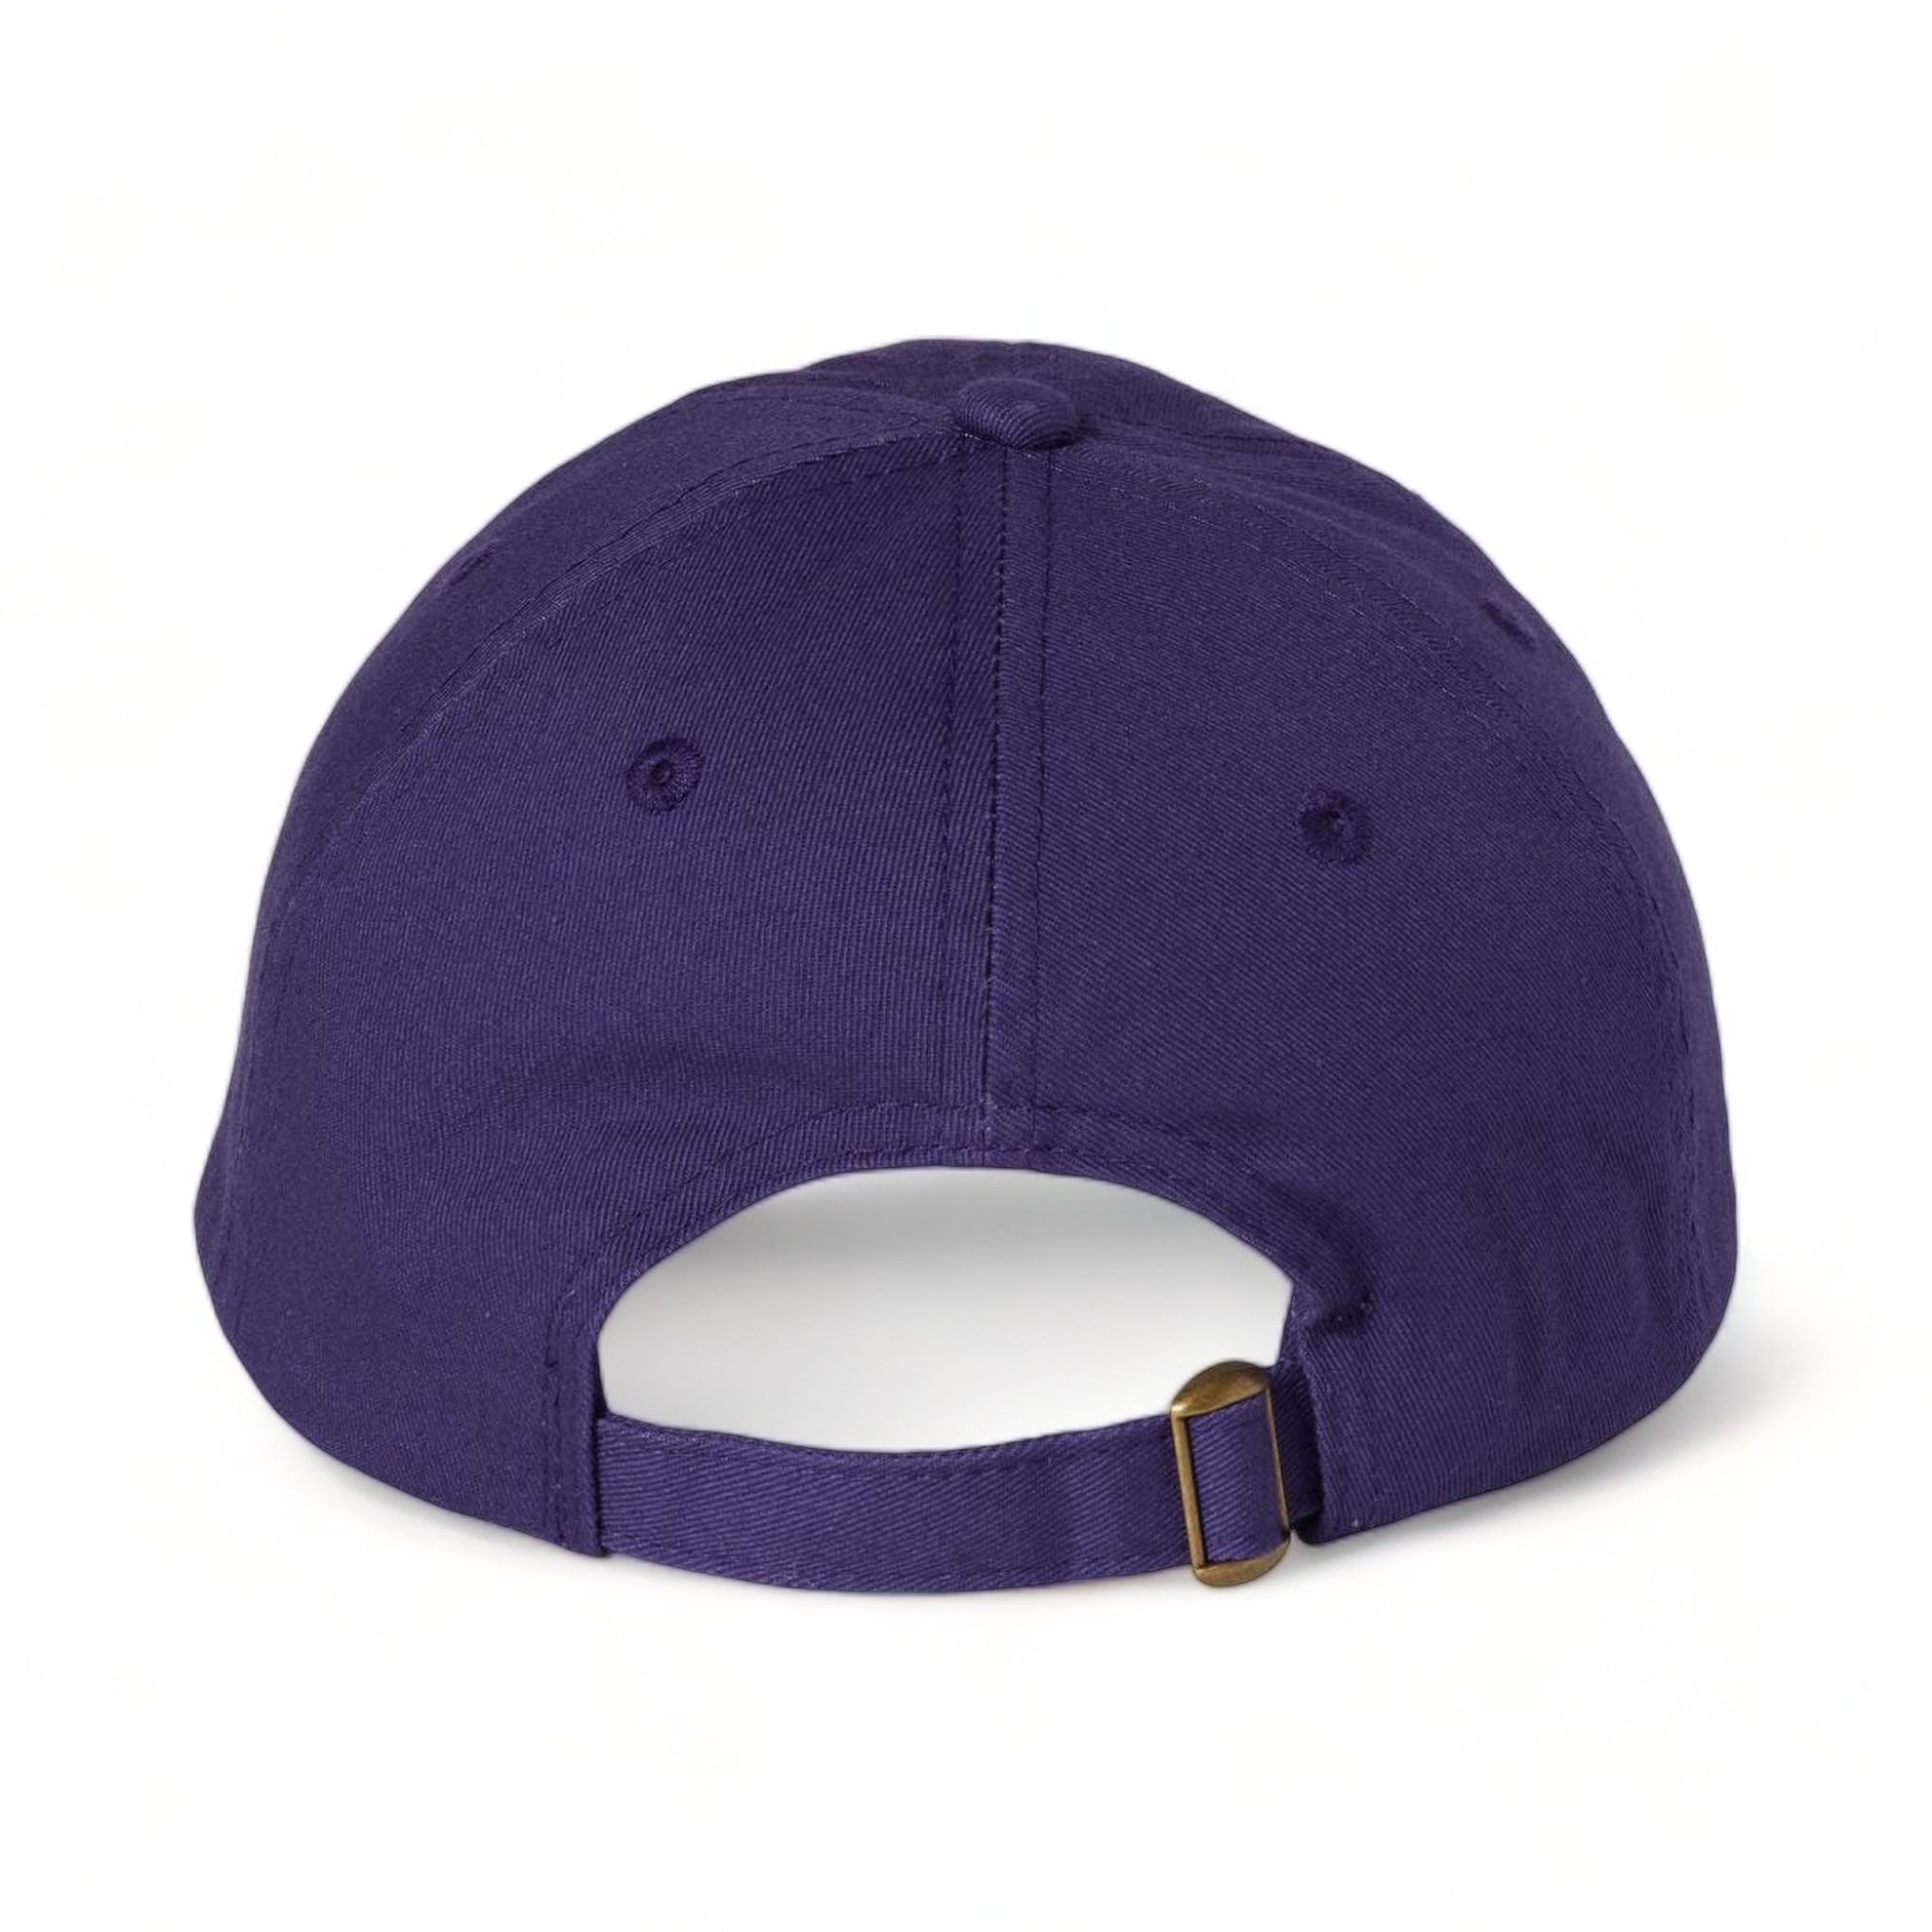 Back view of Valucap VC300A custom hat in purple